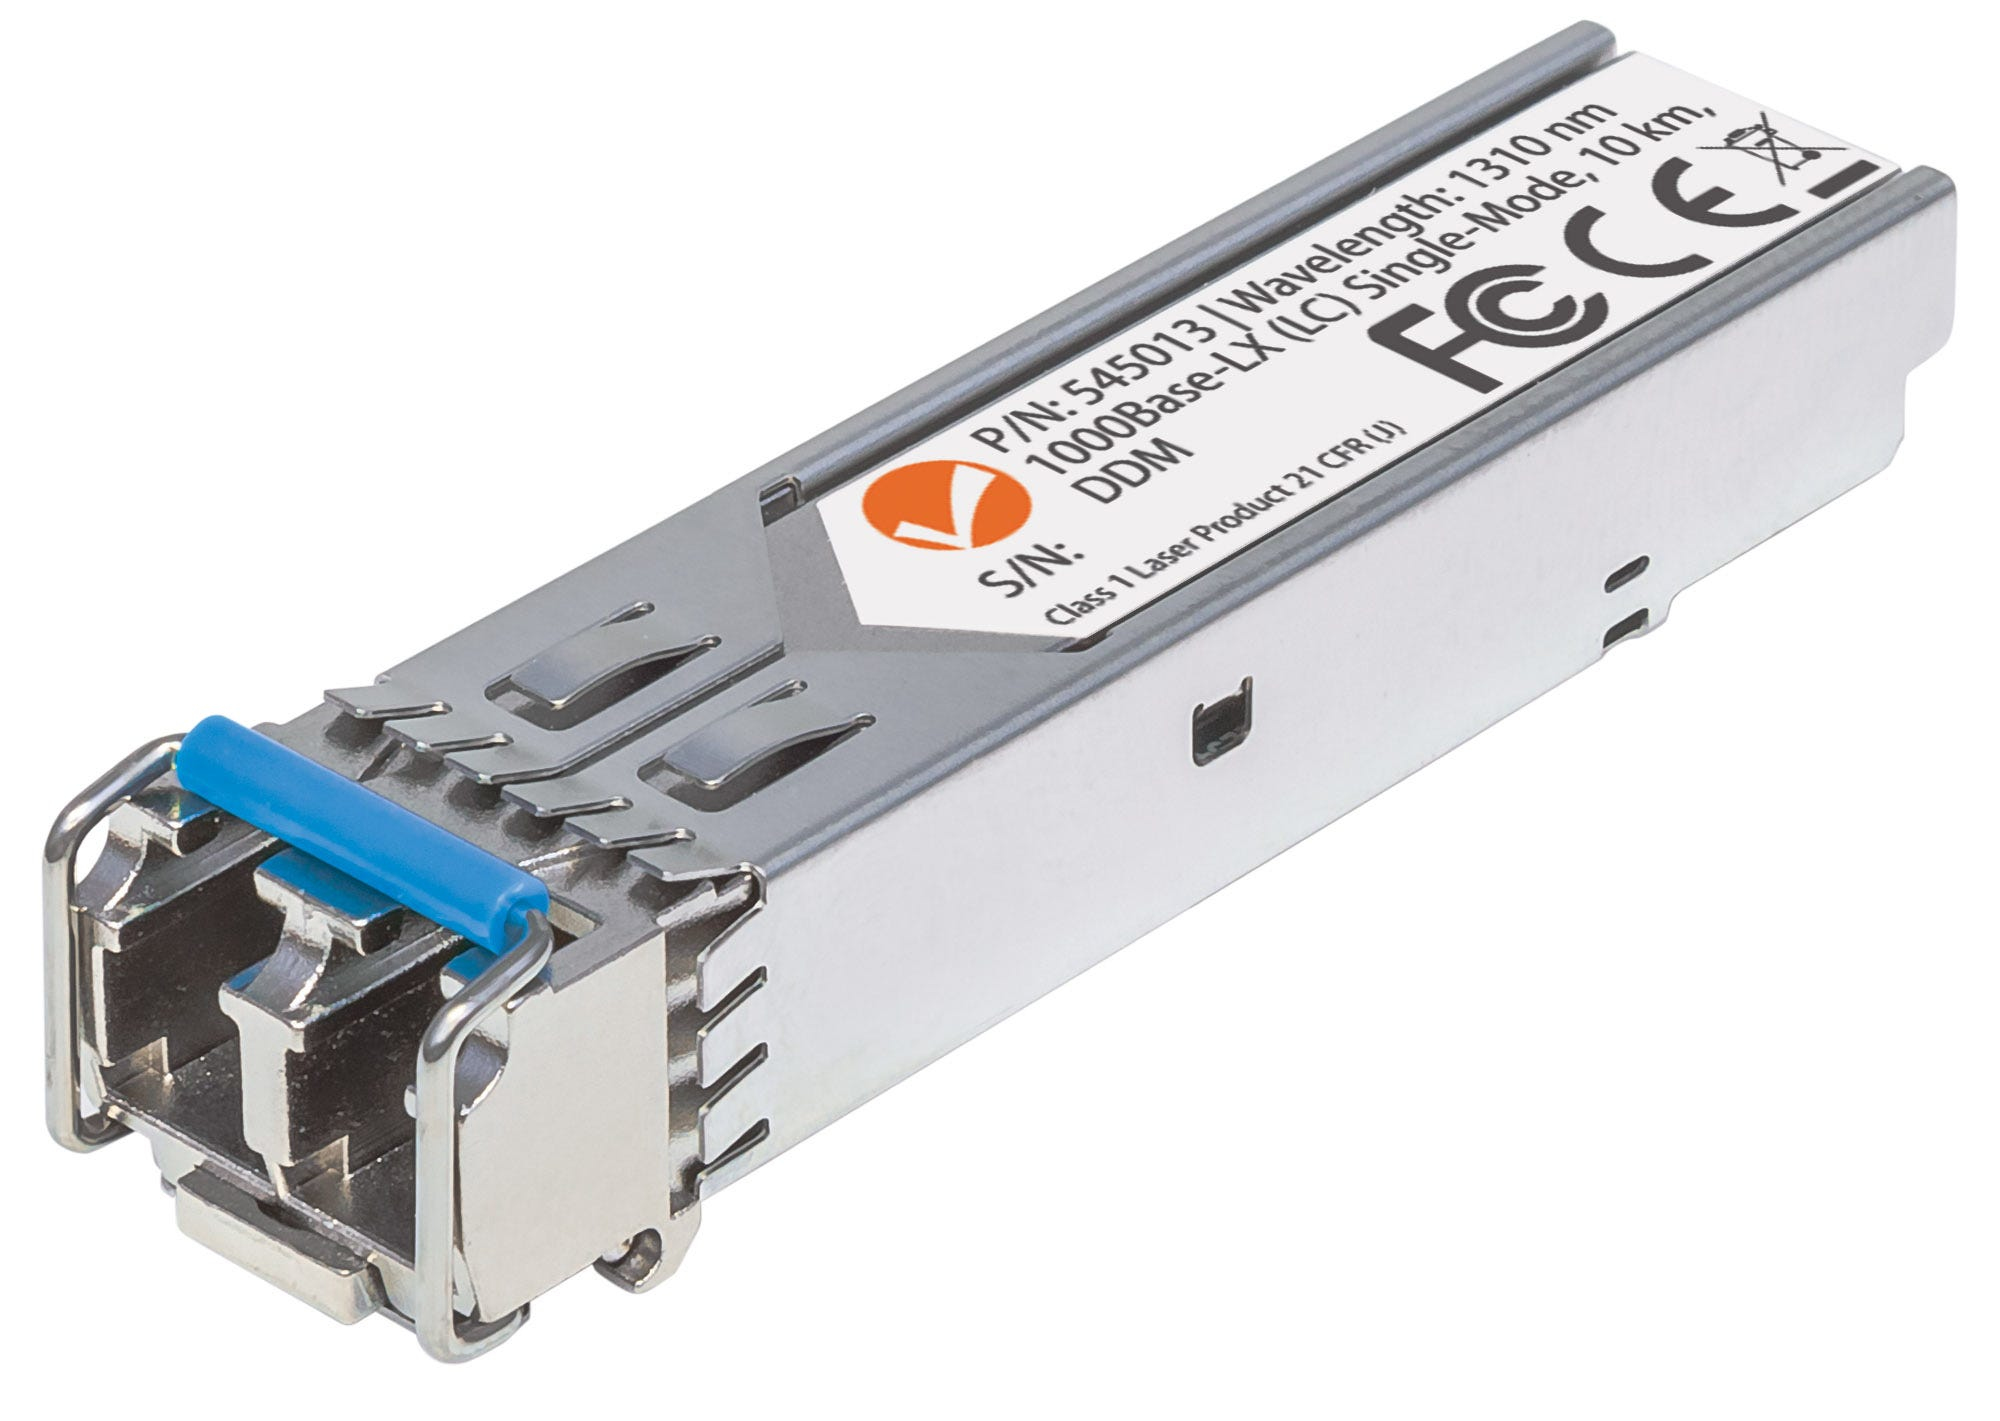 Intellinet Transceiver Module Optical, Gigabit Fiber SFP, 1000Base-Lx (LC)